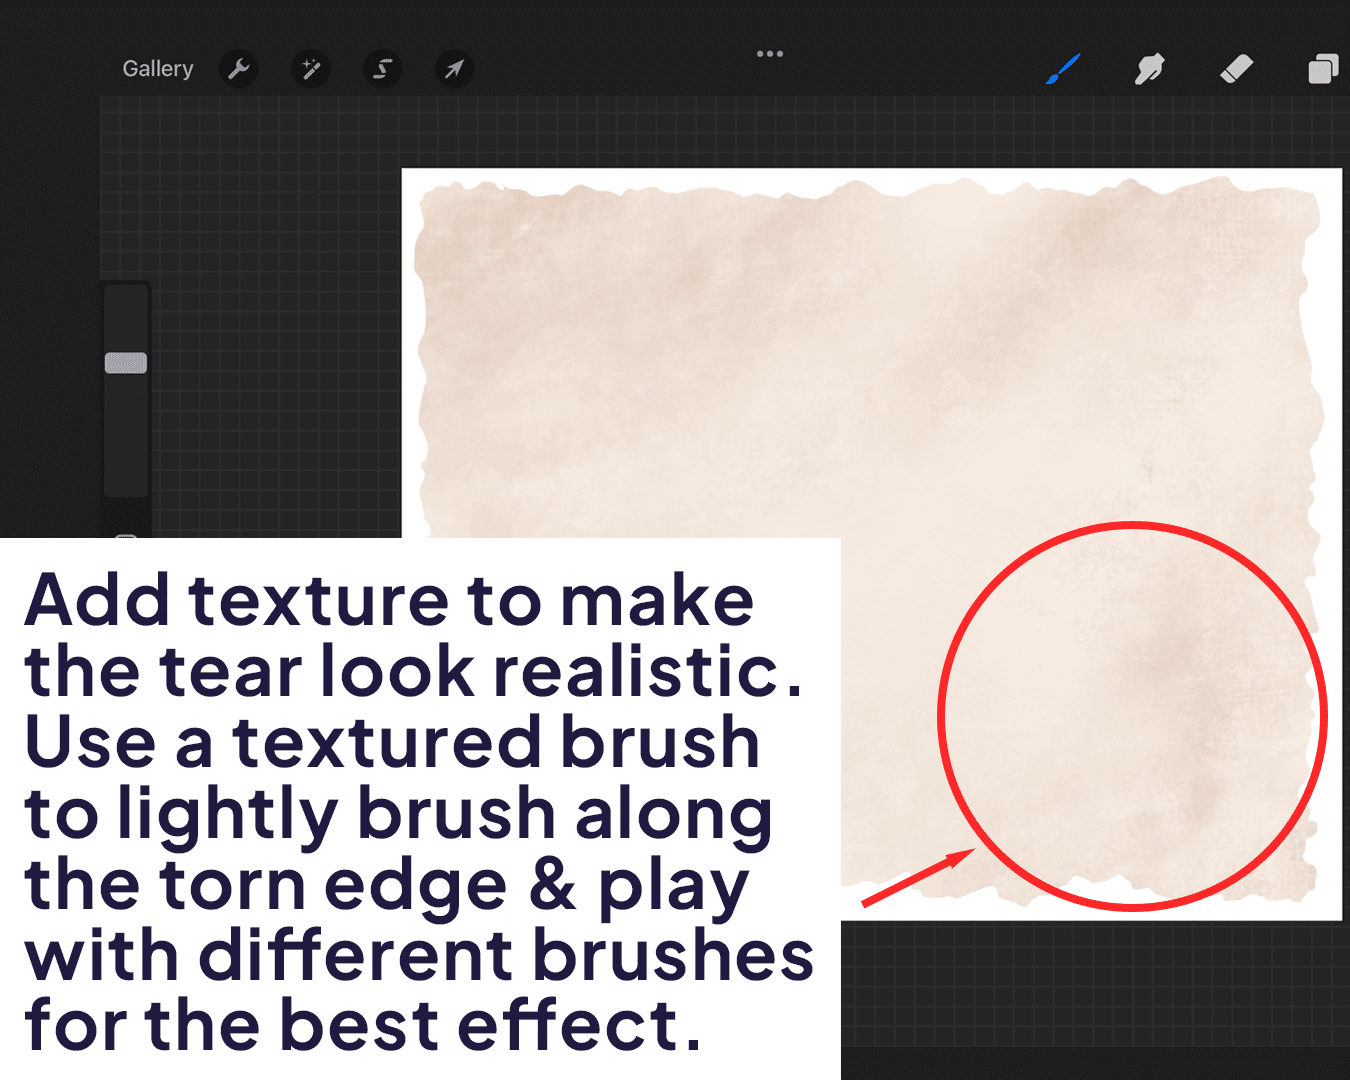 Adding texture